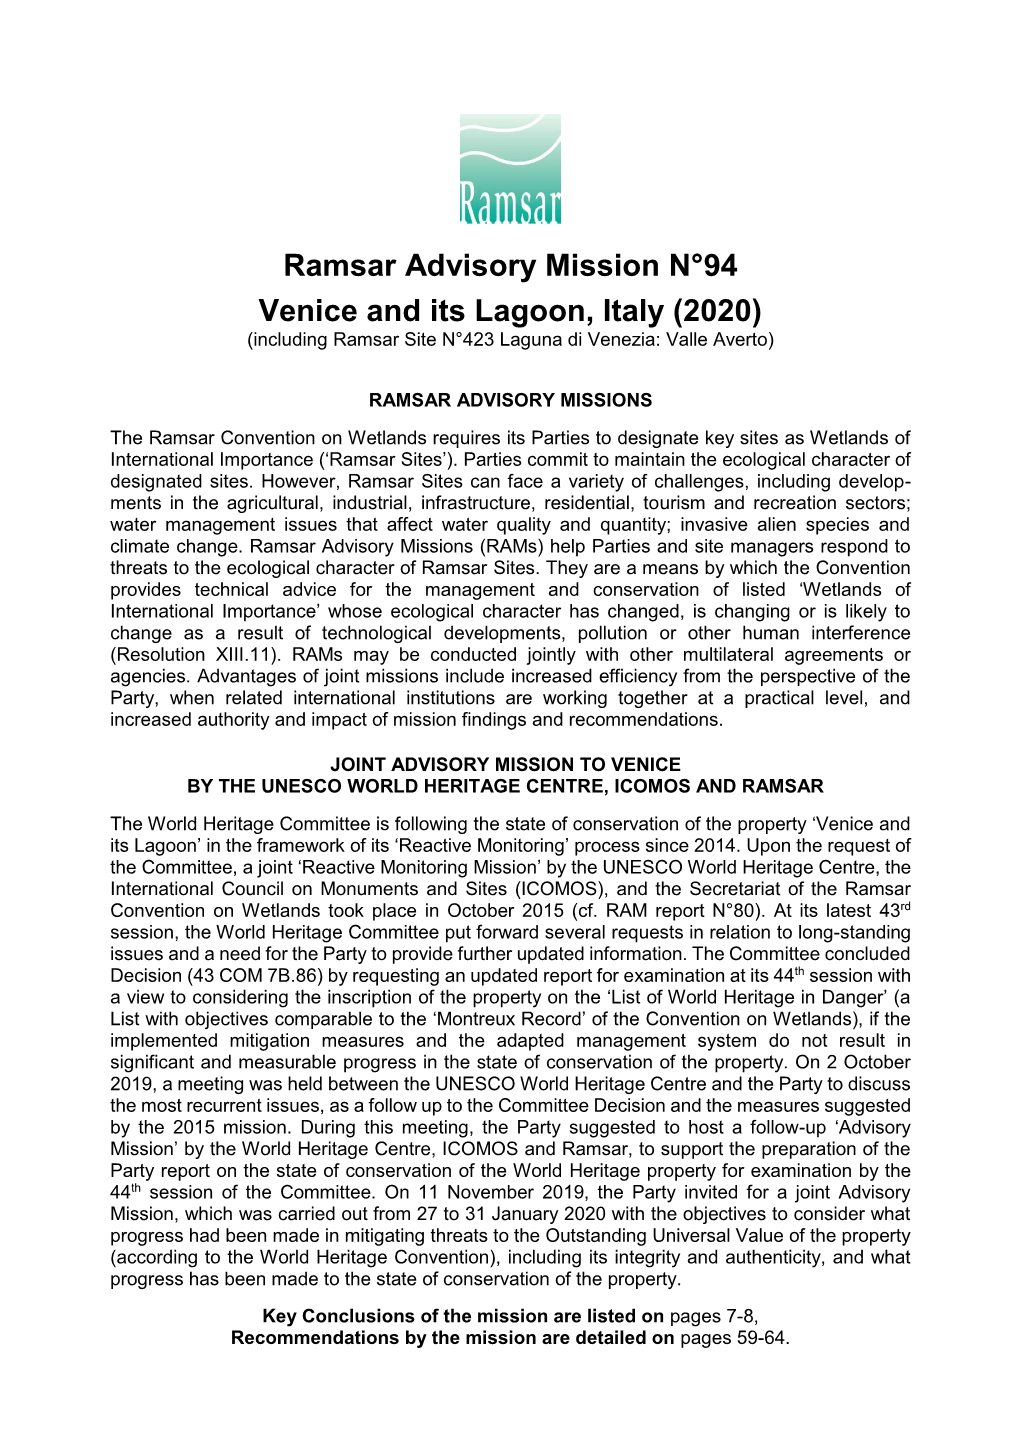 Ramsar Advisory Mission N°94 Venice and Its Lagoon, Italy (2020)